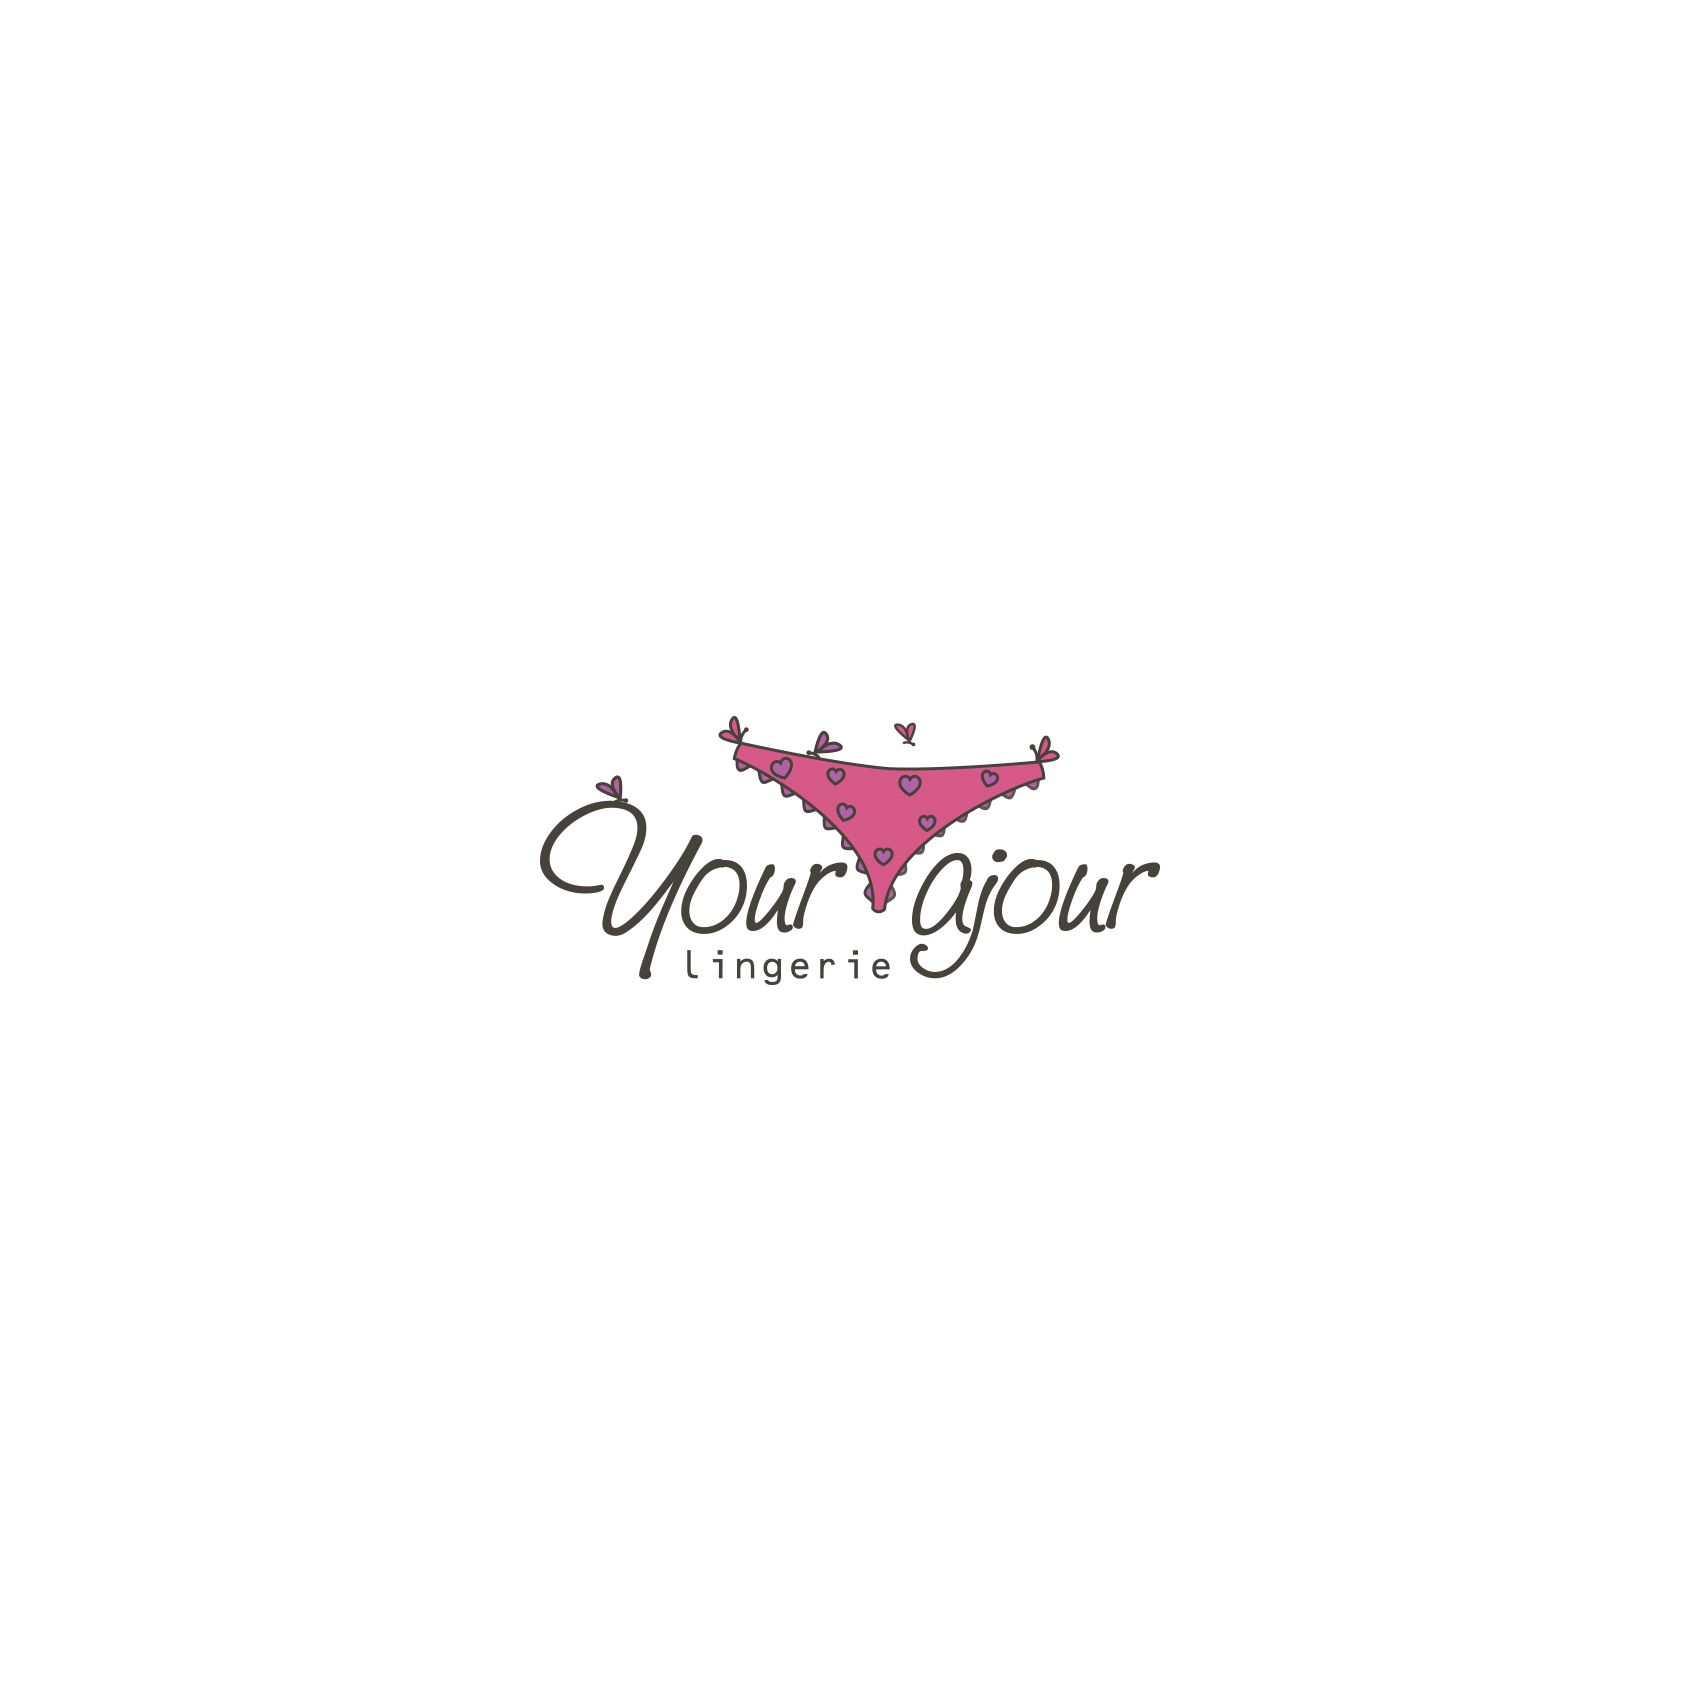 Логотип для бренда Your ajour - дизайнер mkravchenko